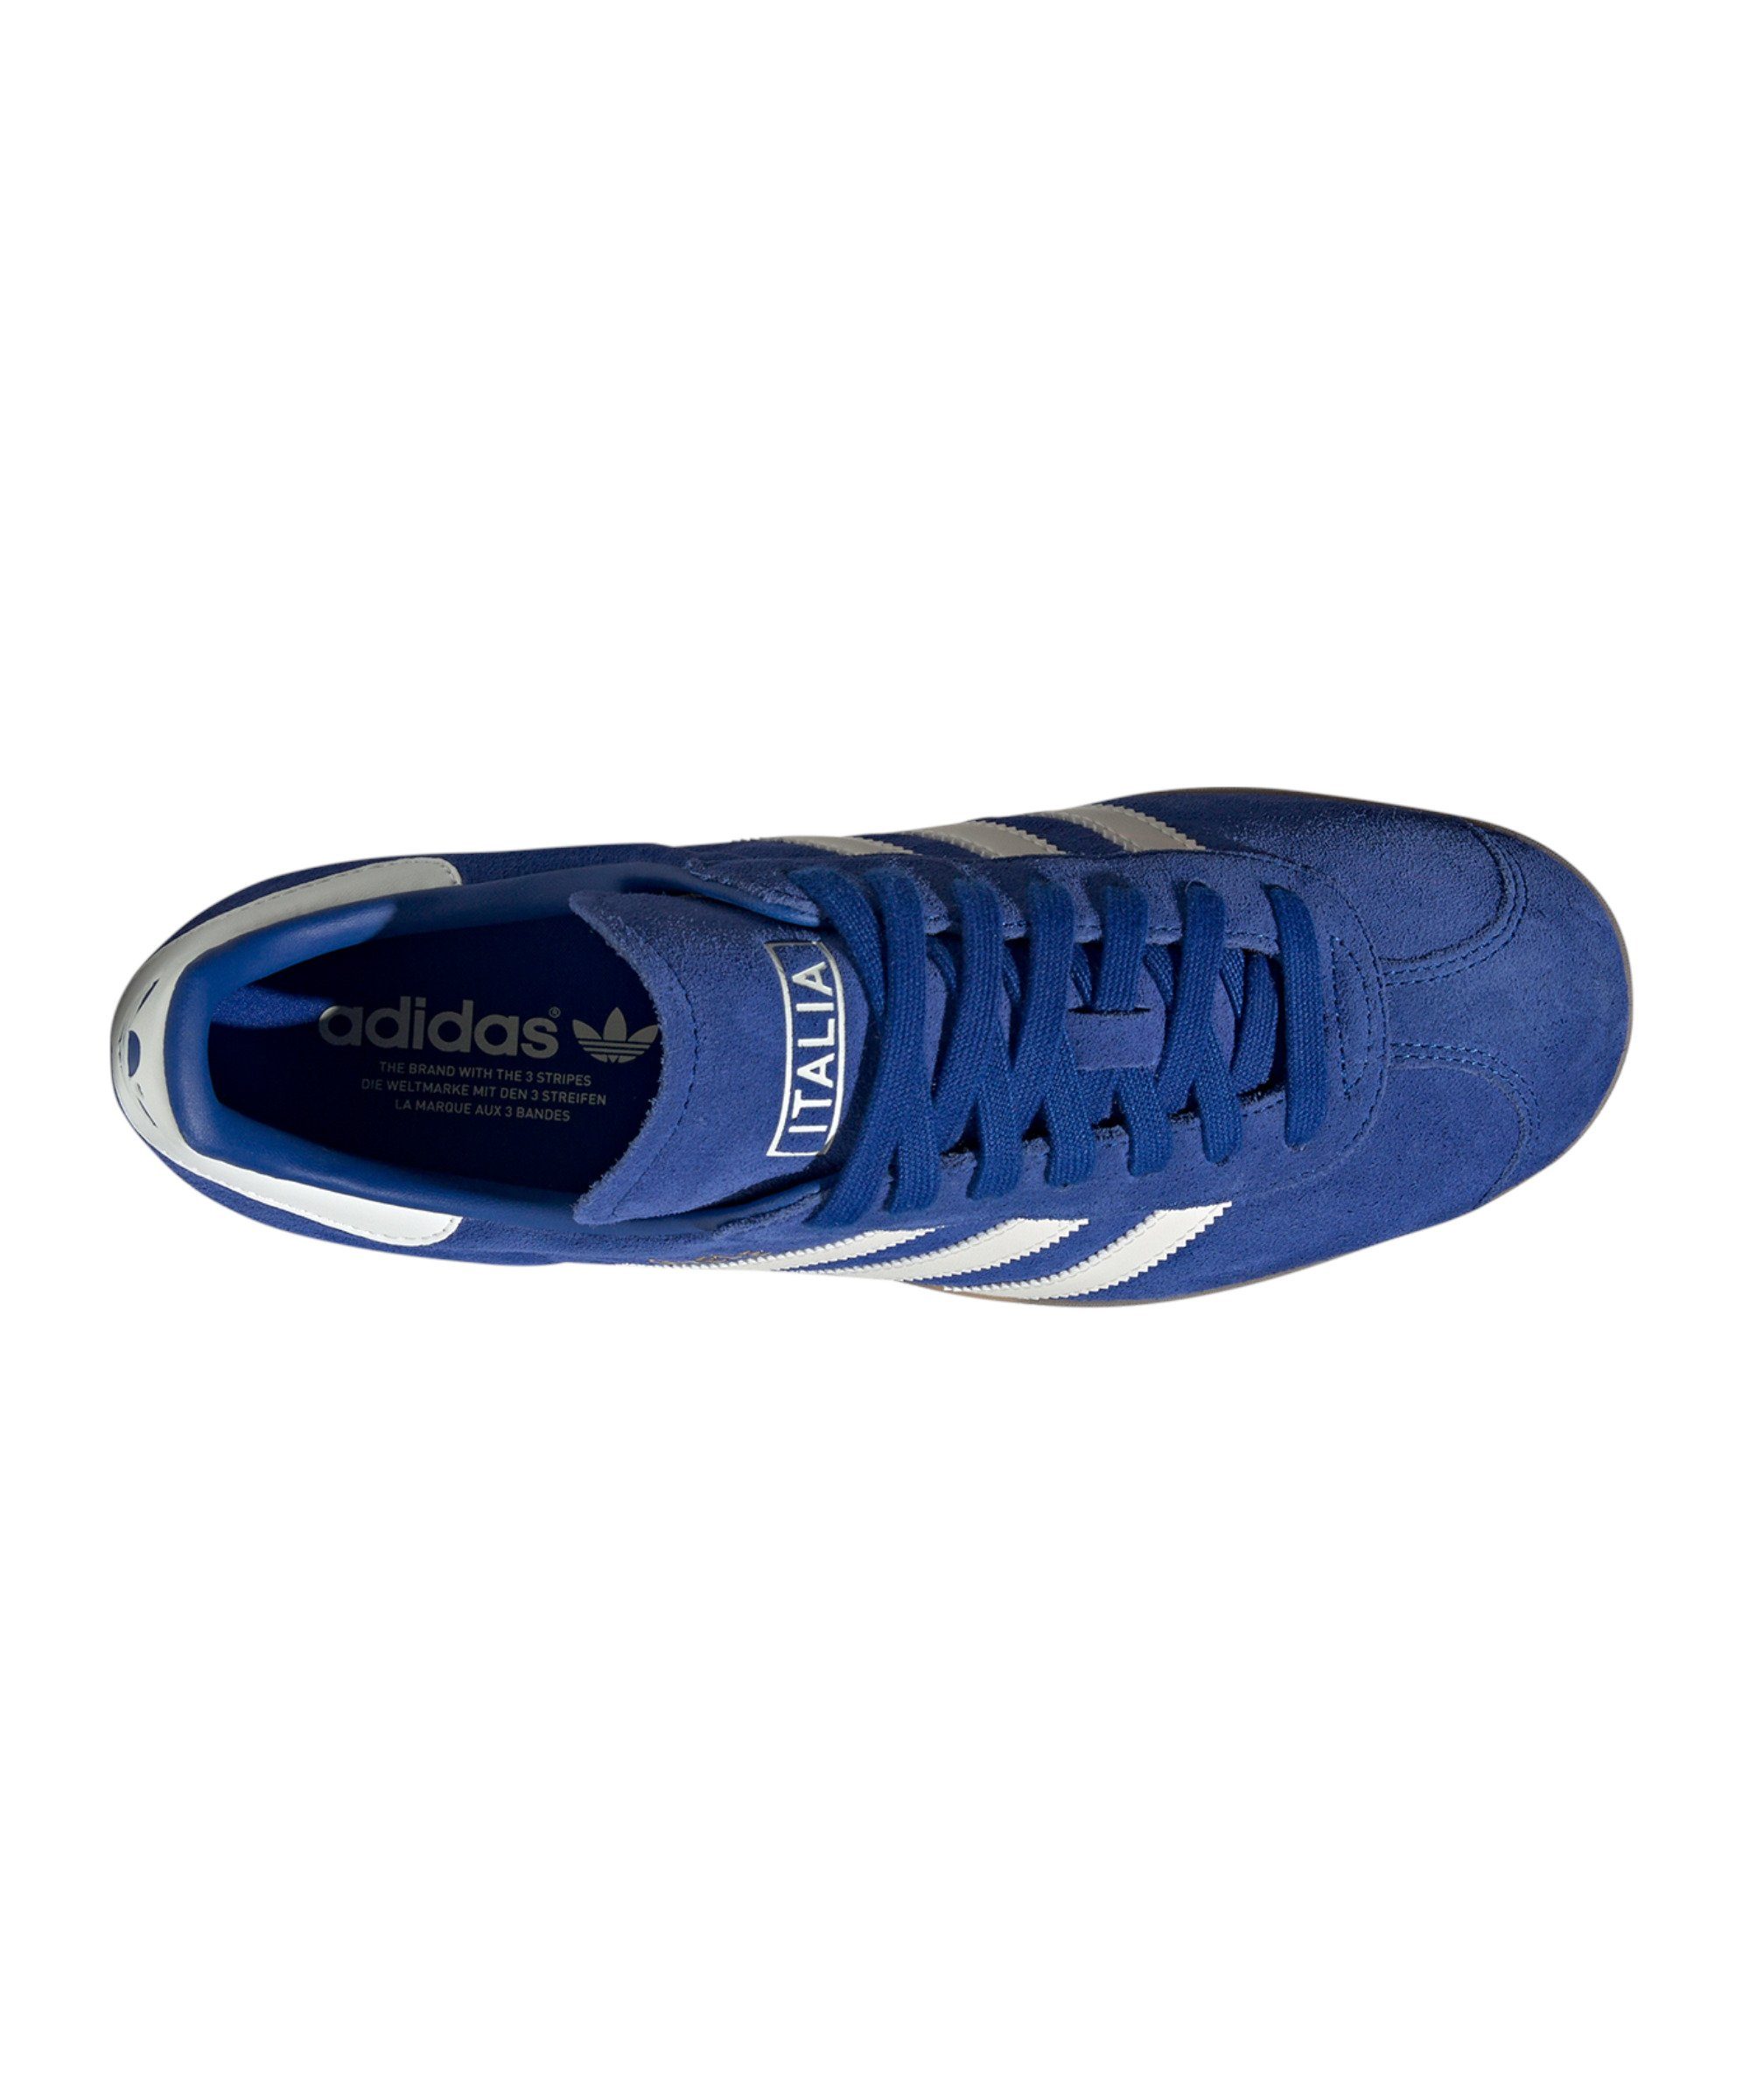 Originals Gazelle adidas Sneaker